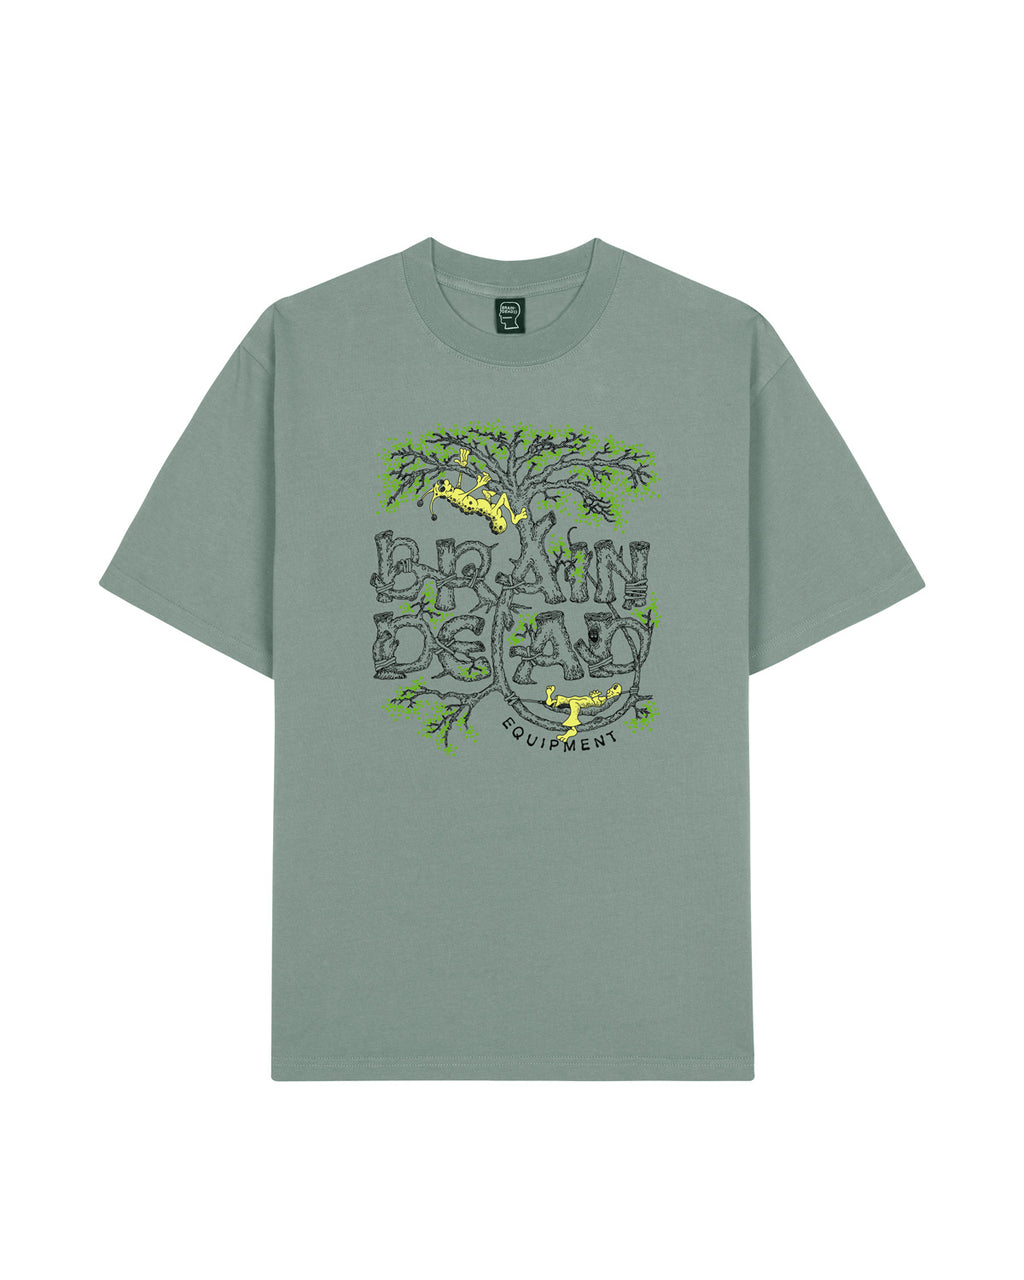 Brain Dead Equipment Treetops T-shirt - Seafoam